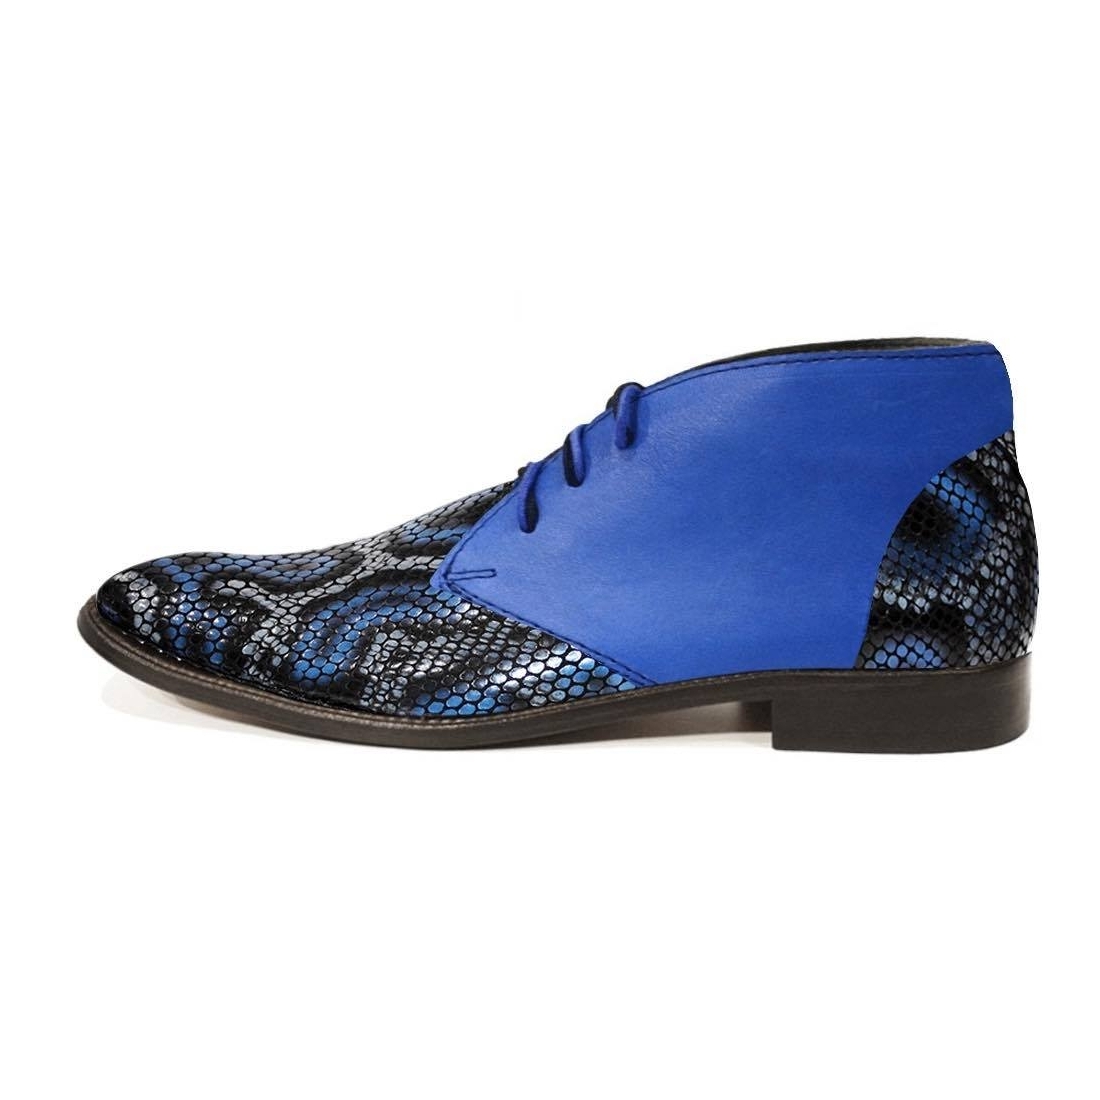 Modello Serpentto - Chukka Boots - Handmade Colorful Italian Leather Shoes